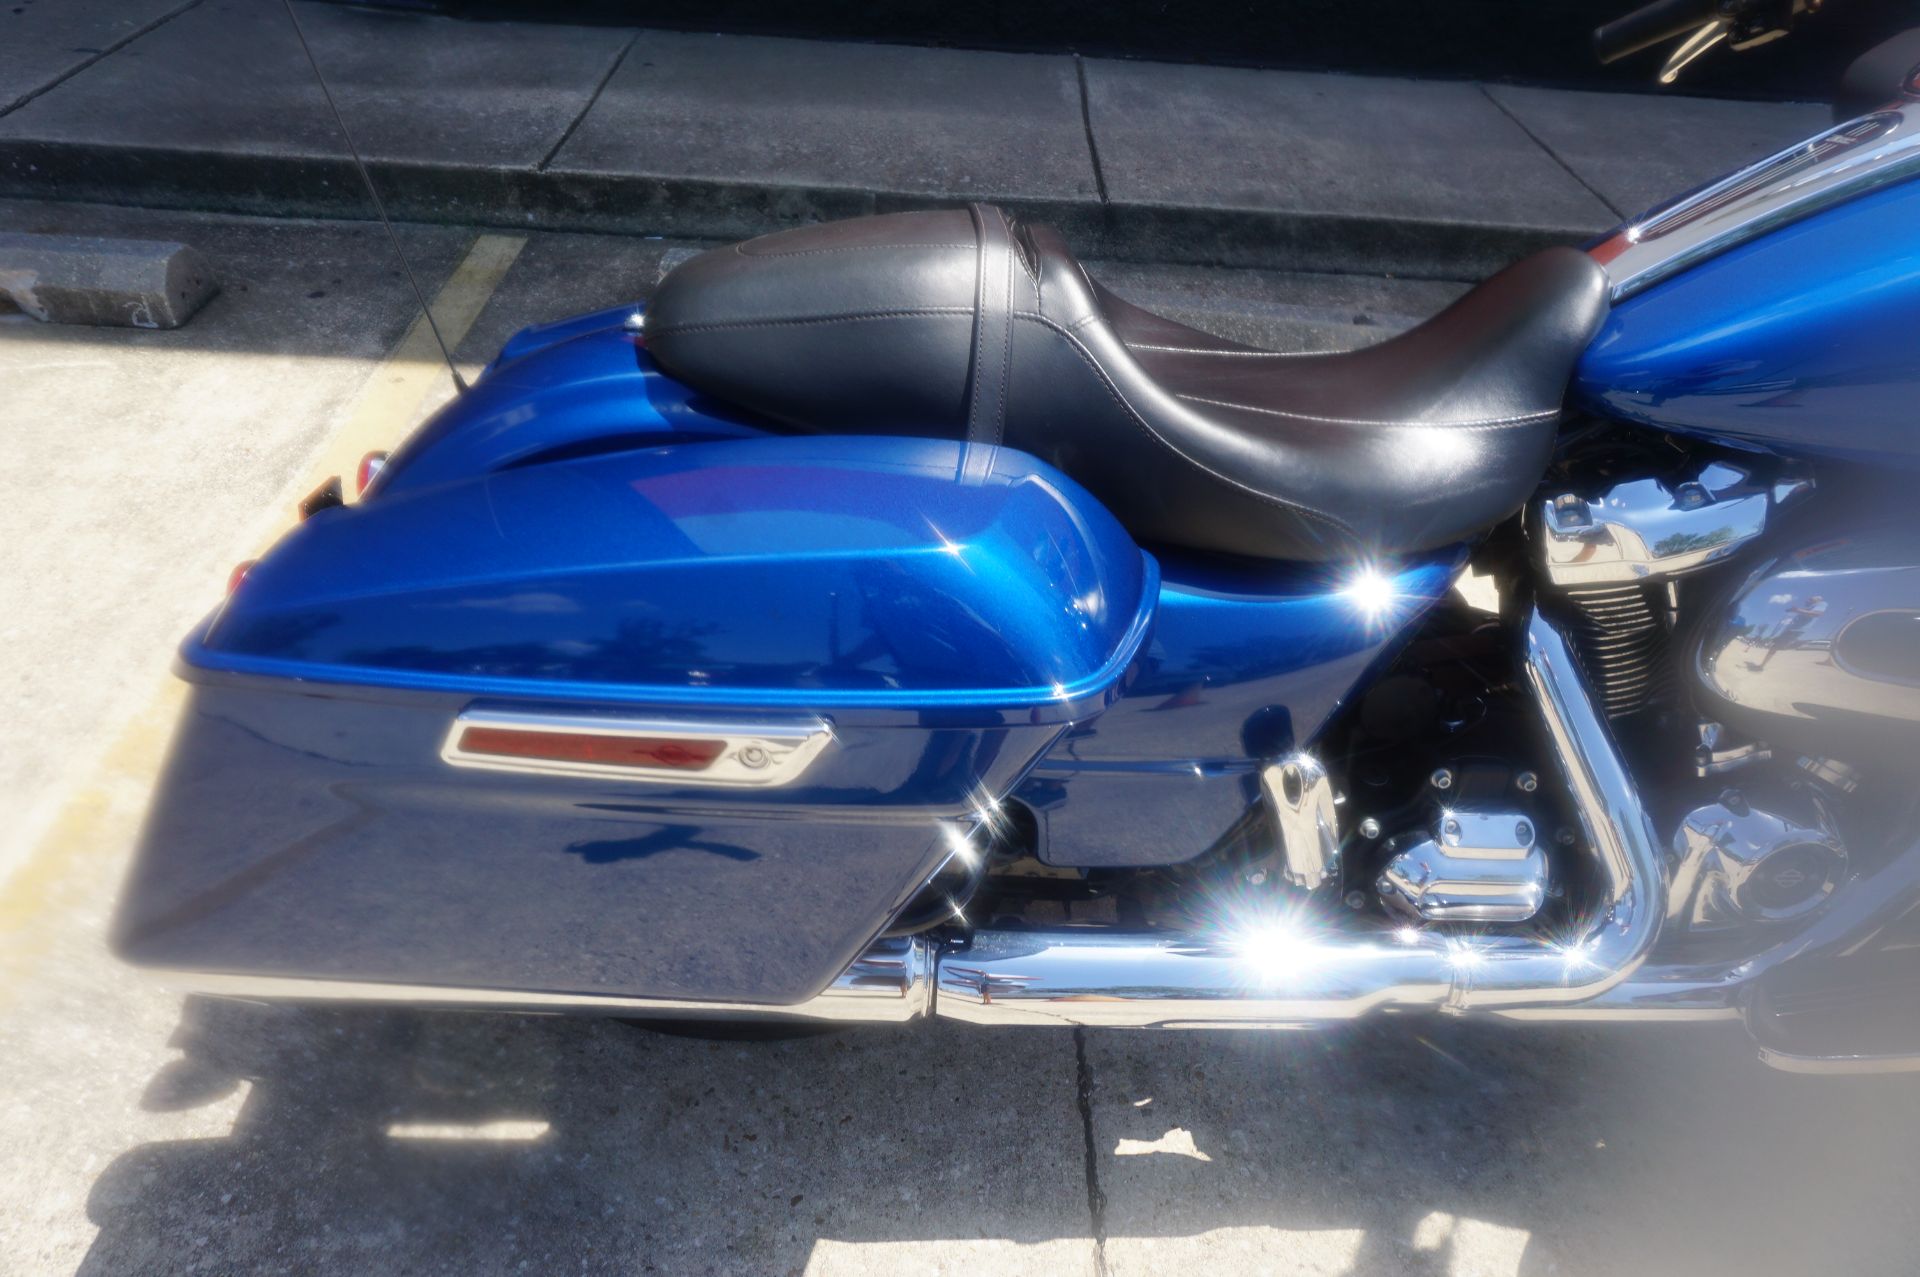 2022 Harley-Davidson Road Glide® in Metairie, Louisiana - Photo 6